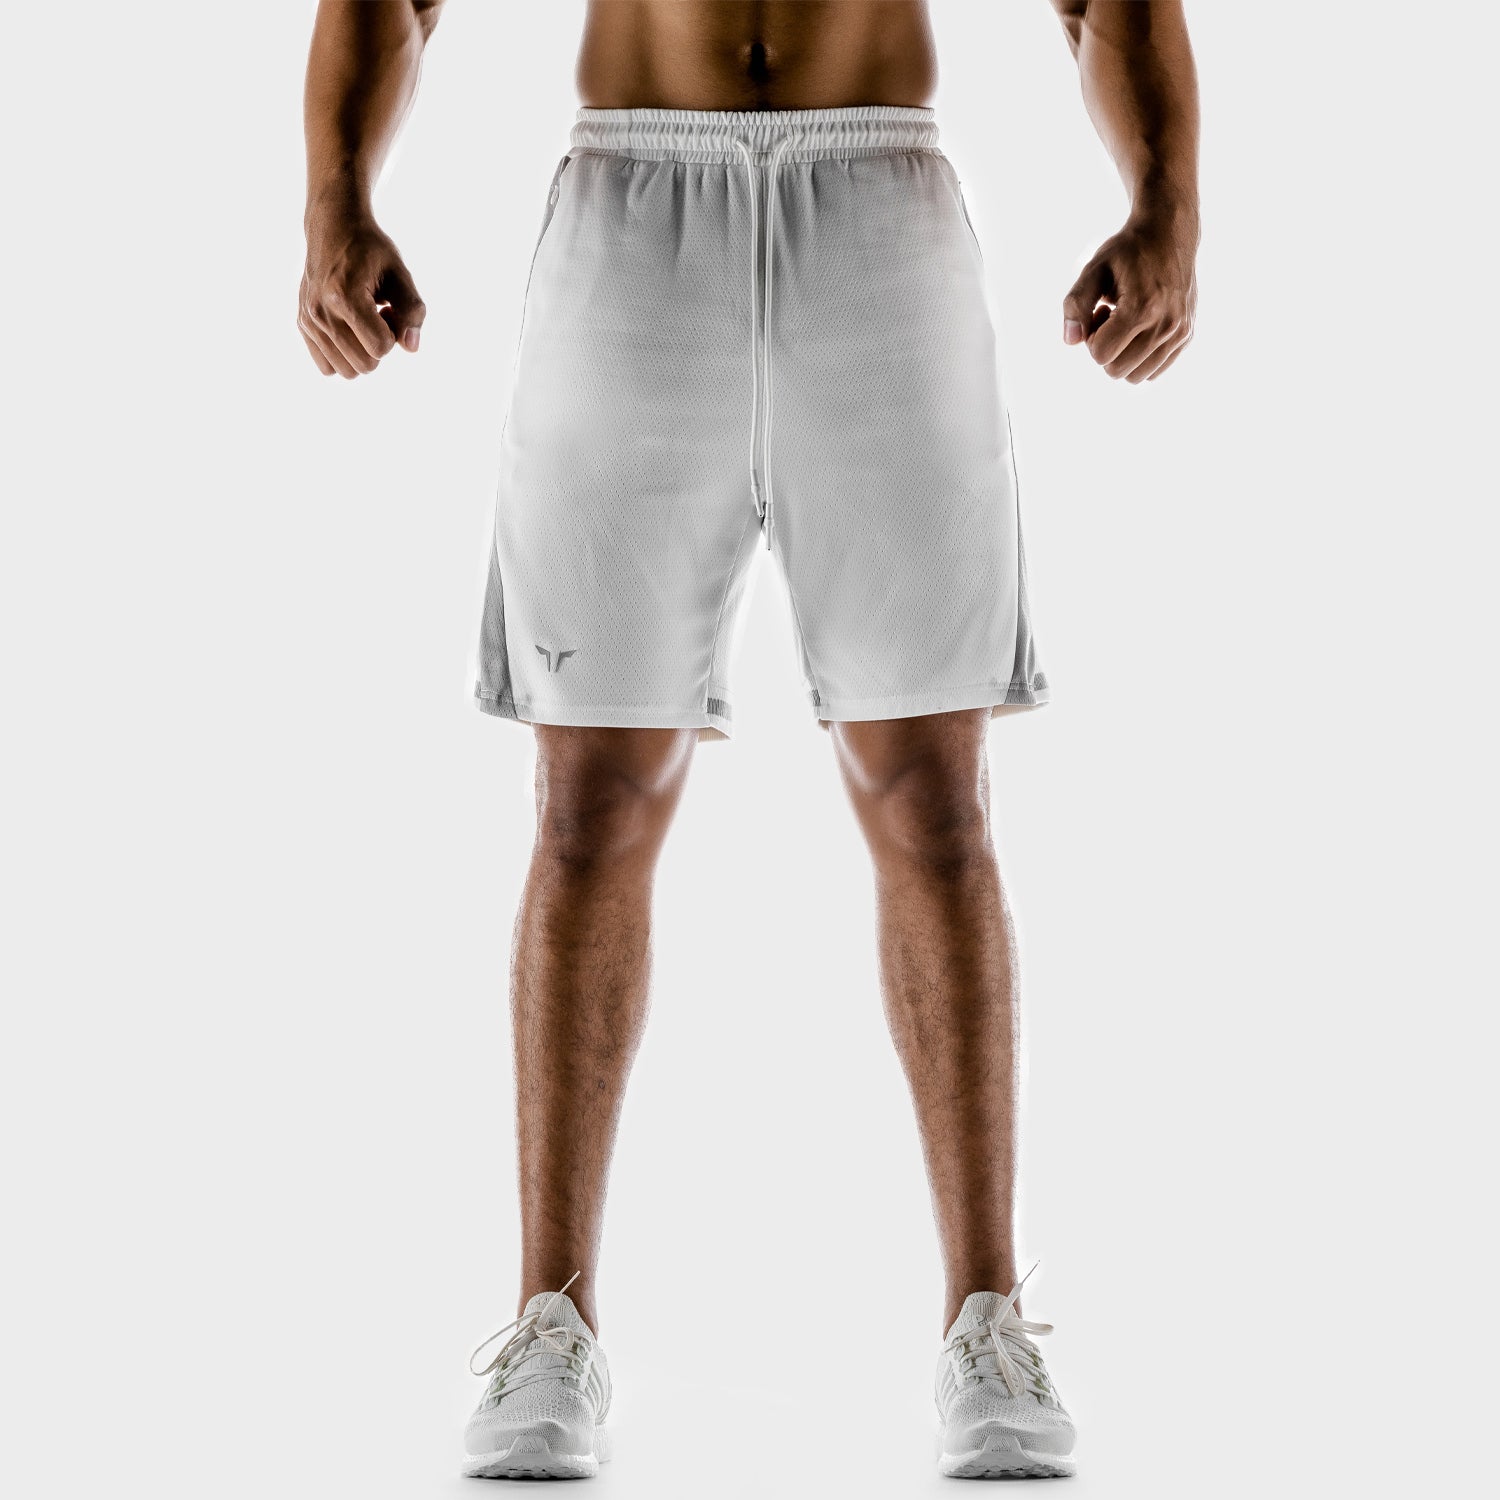 squatwolf-workout-short-for-men-hybrid-2-0-basketball-shorts-white-gym-wear